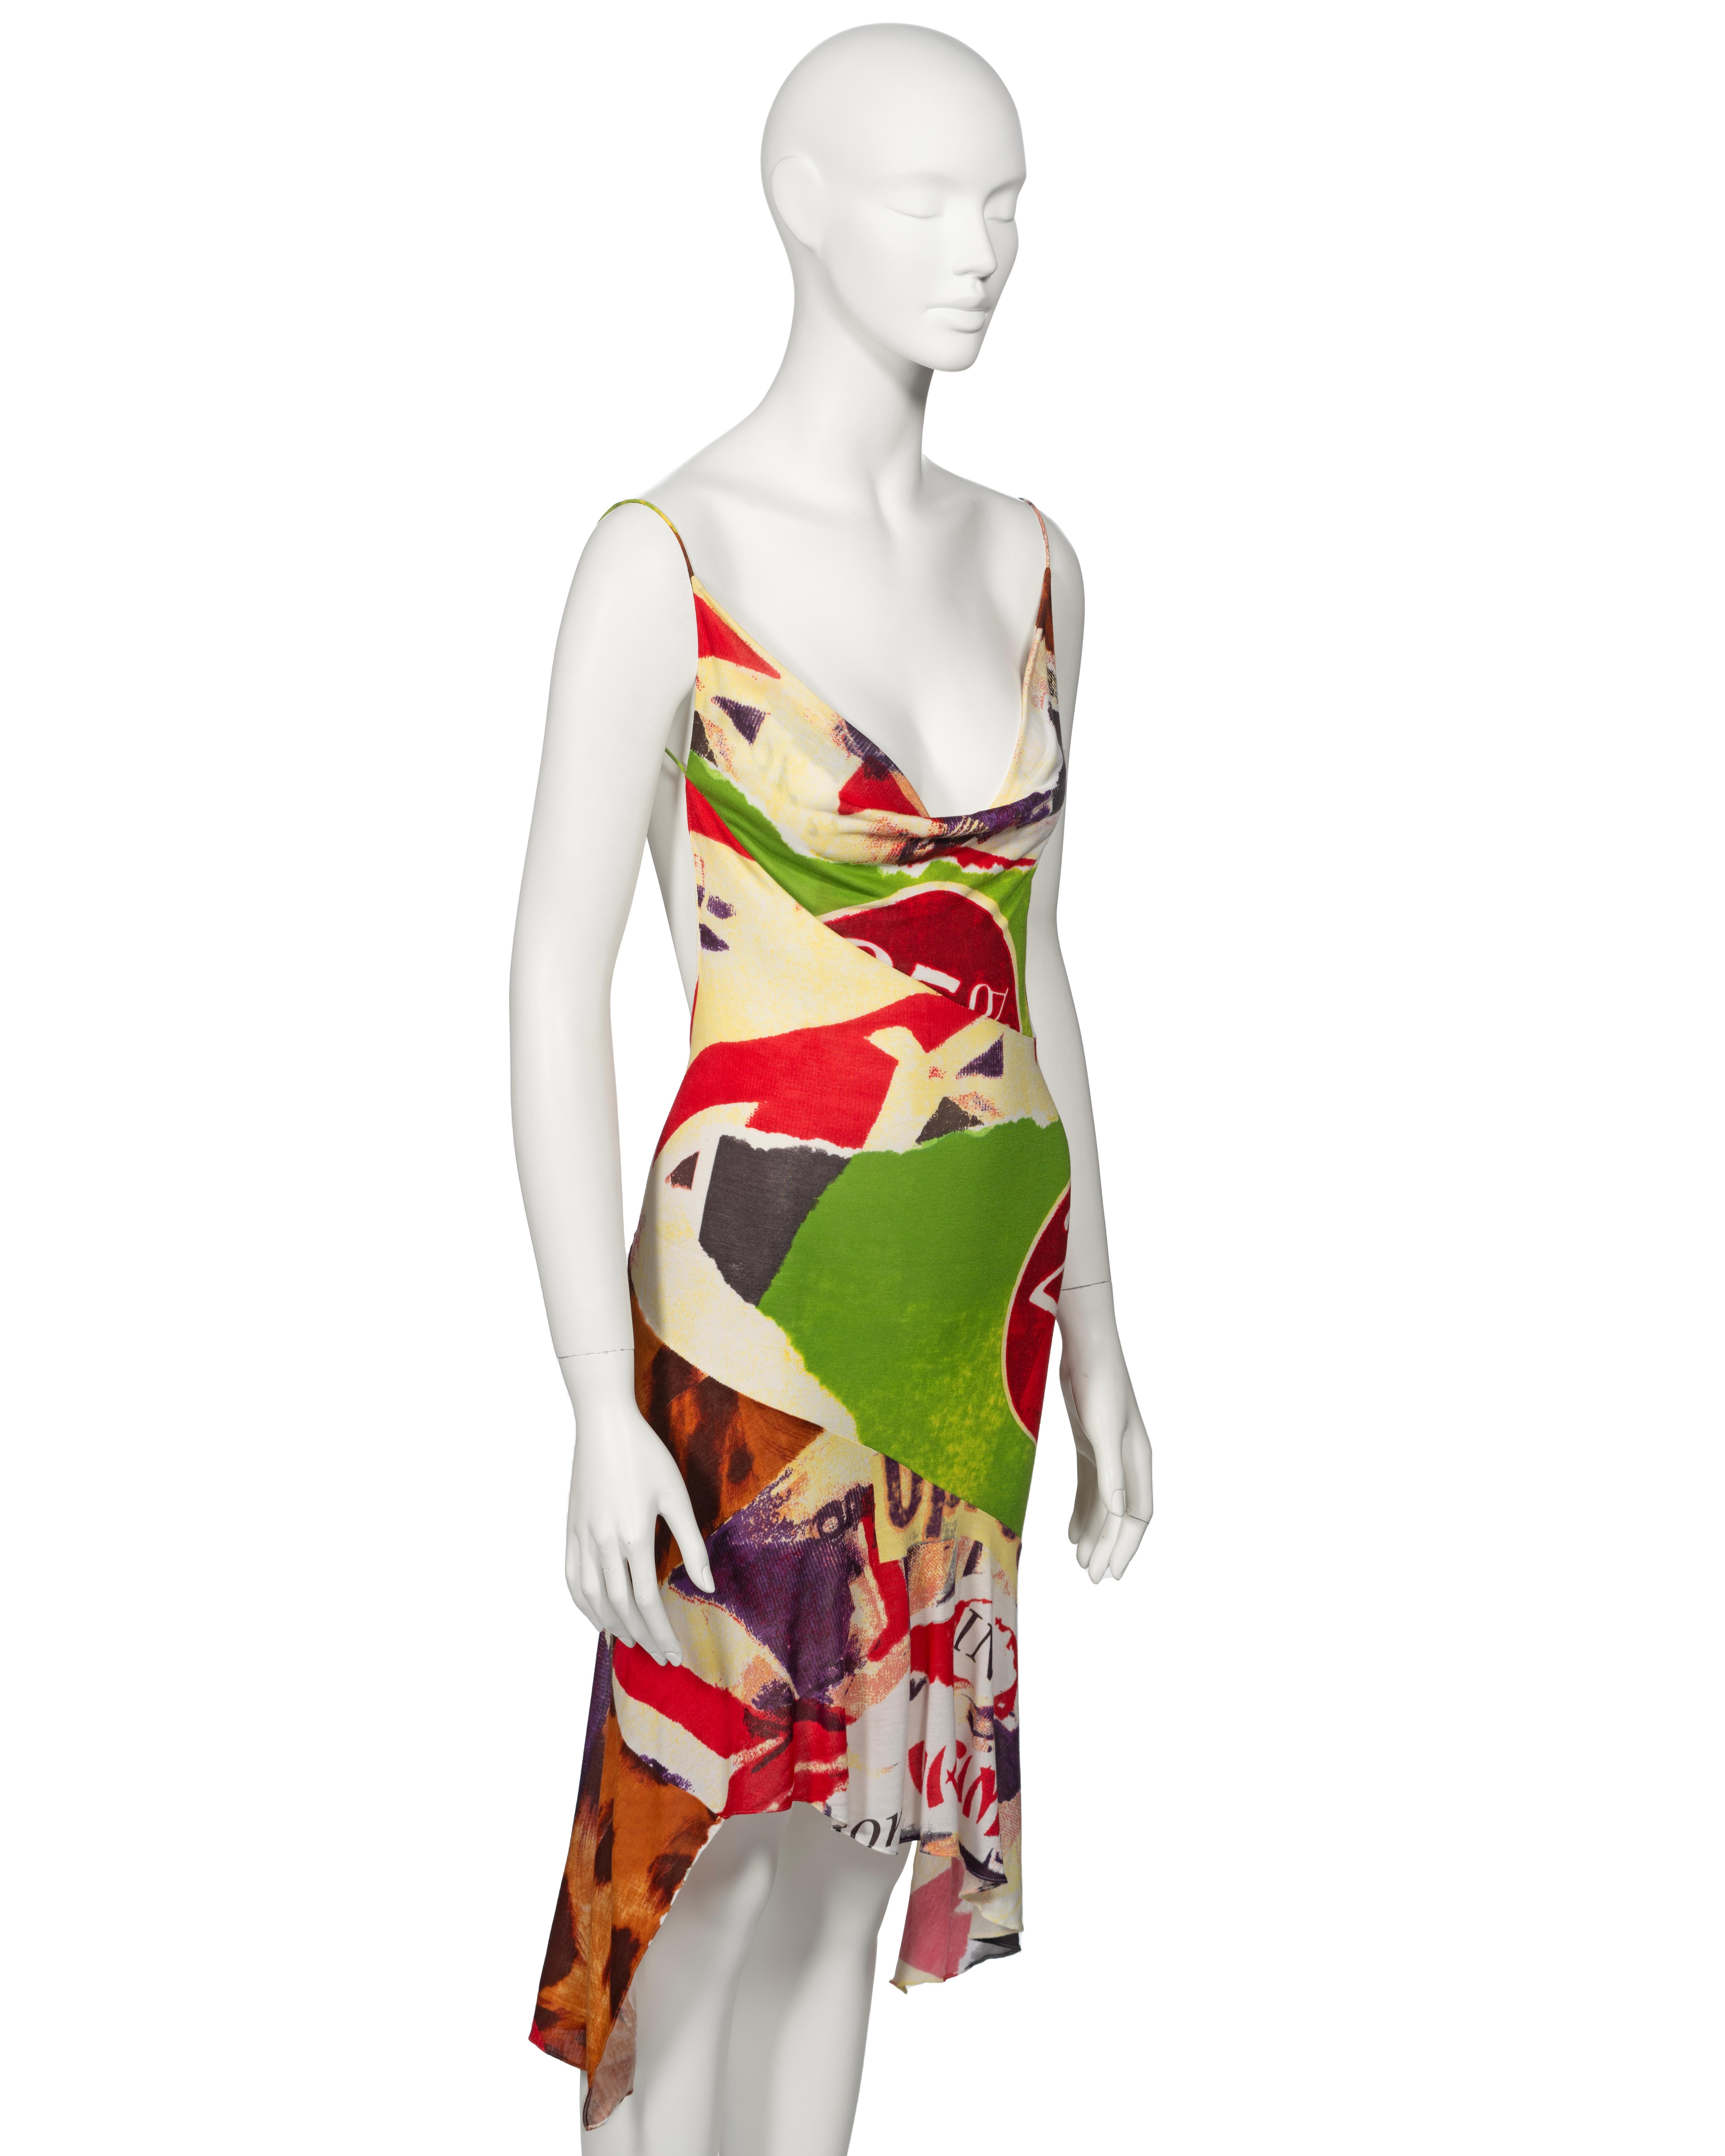 Women's Christian Dior by John Galliano Montage Print Silk Jersey Dress, ss 2003